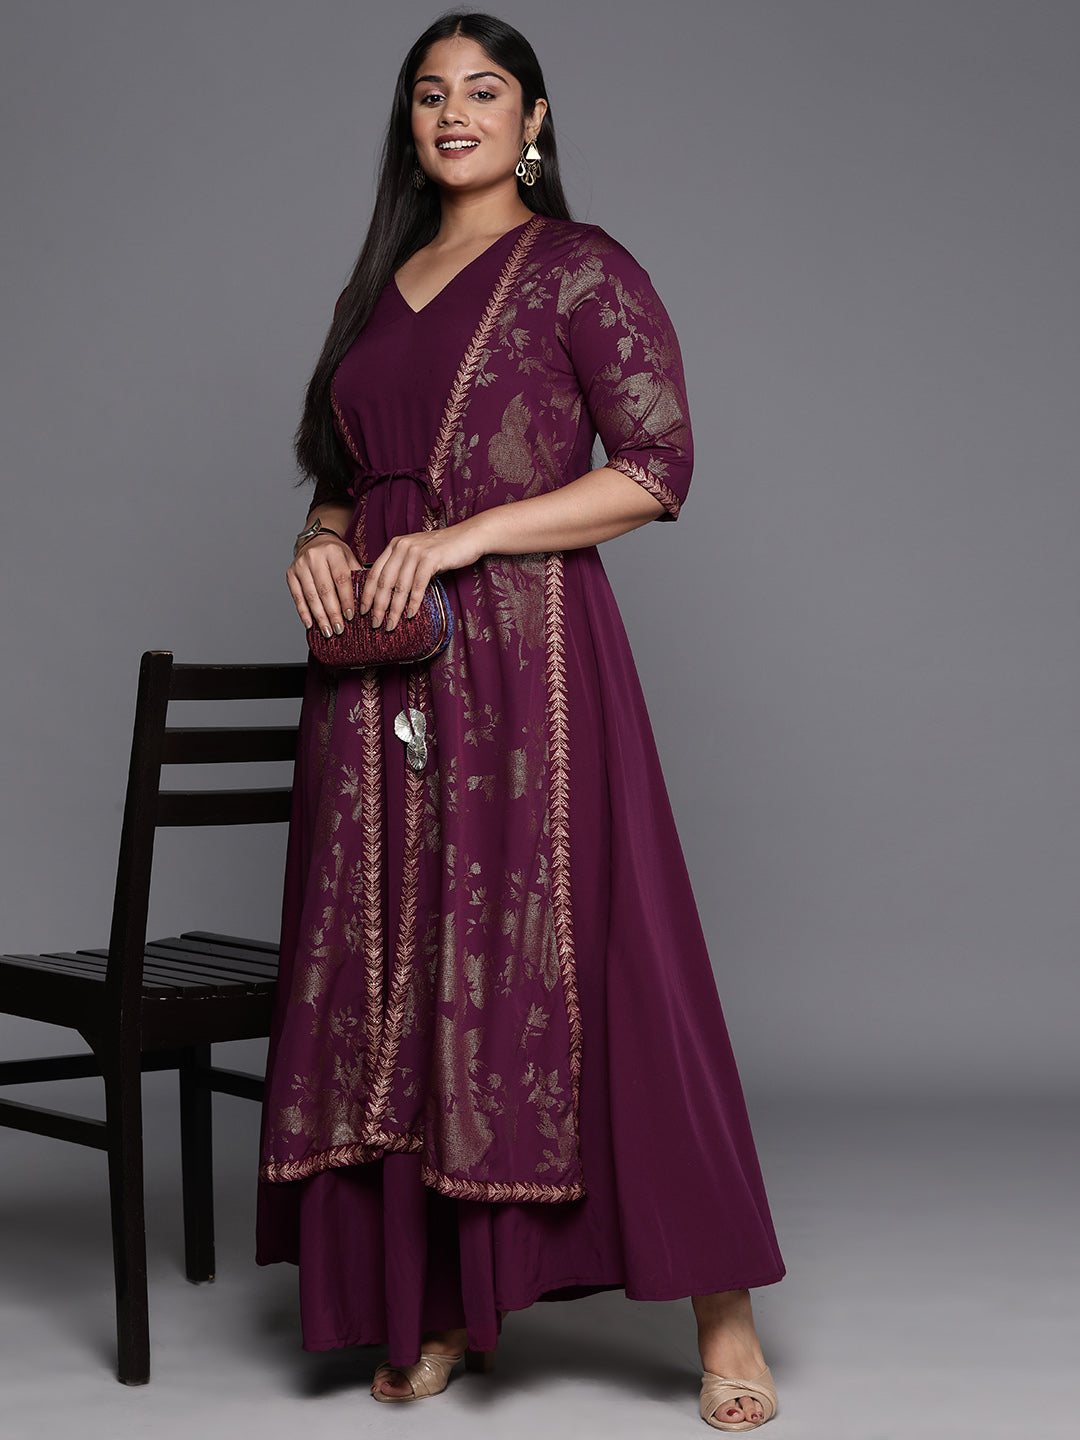 Burgundy & Gold Plus Size Floral Print A-line Maxi Ethnic Dress